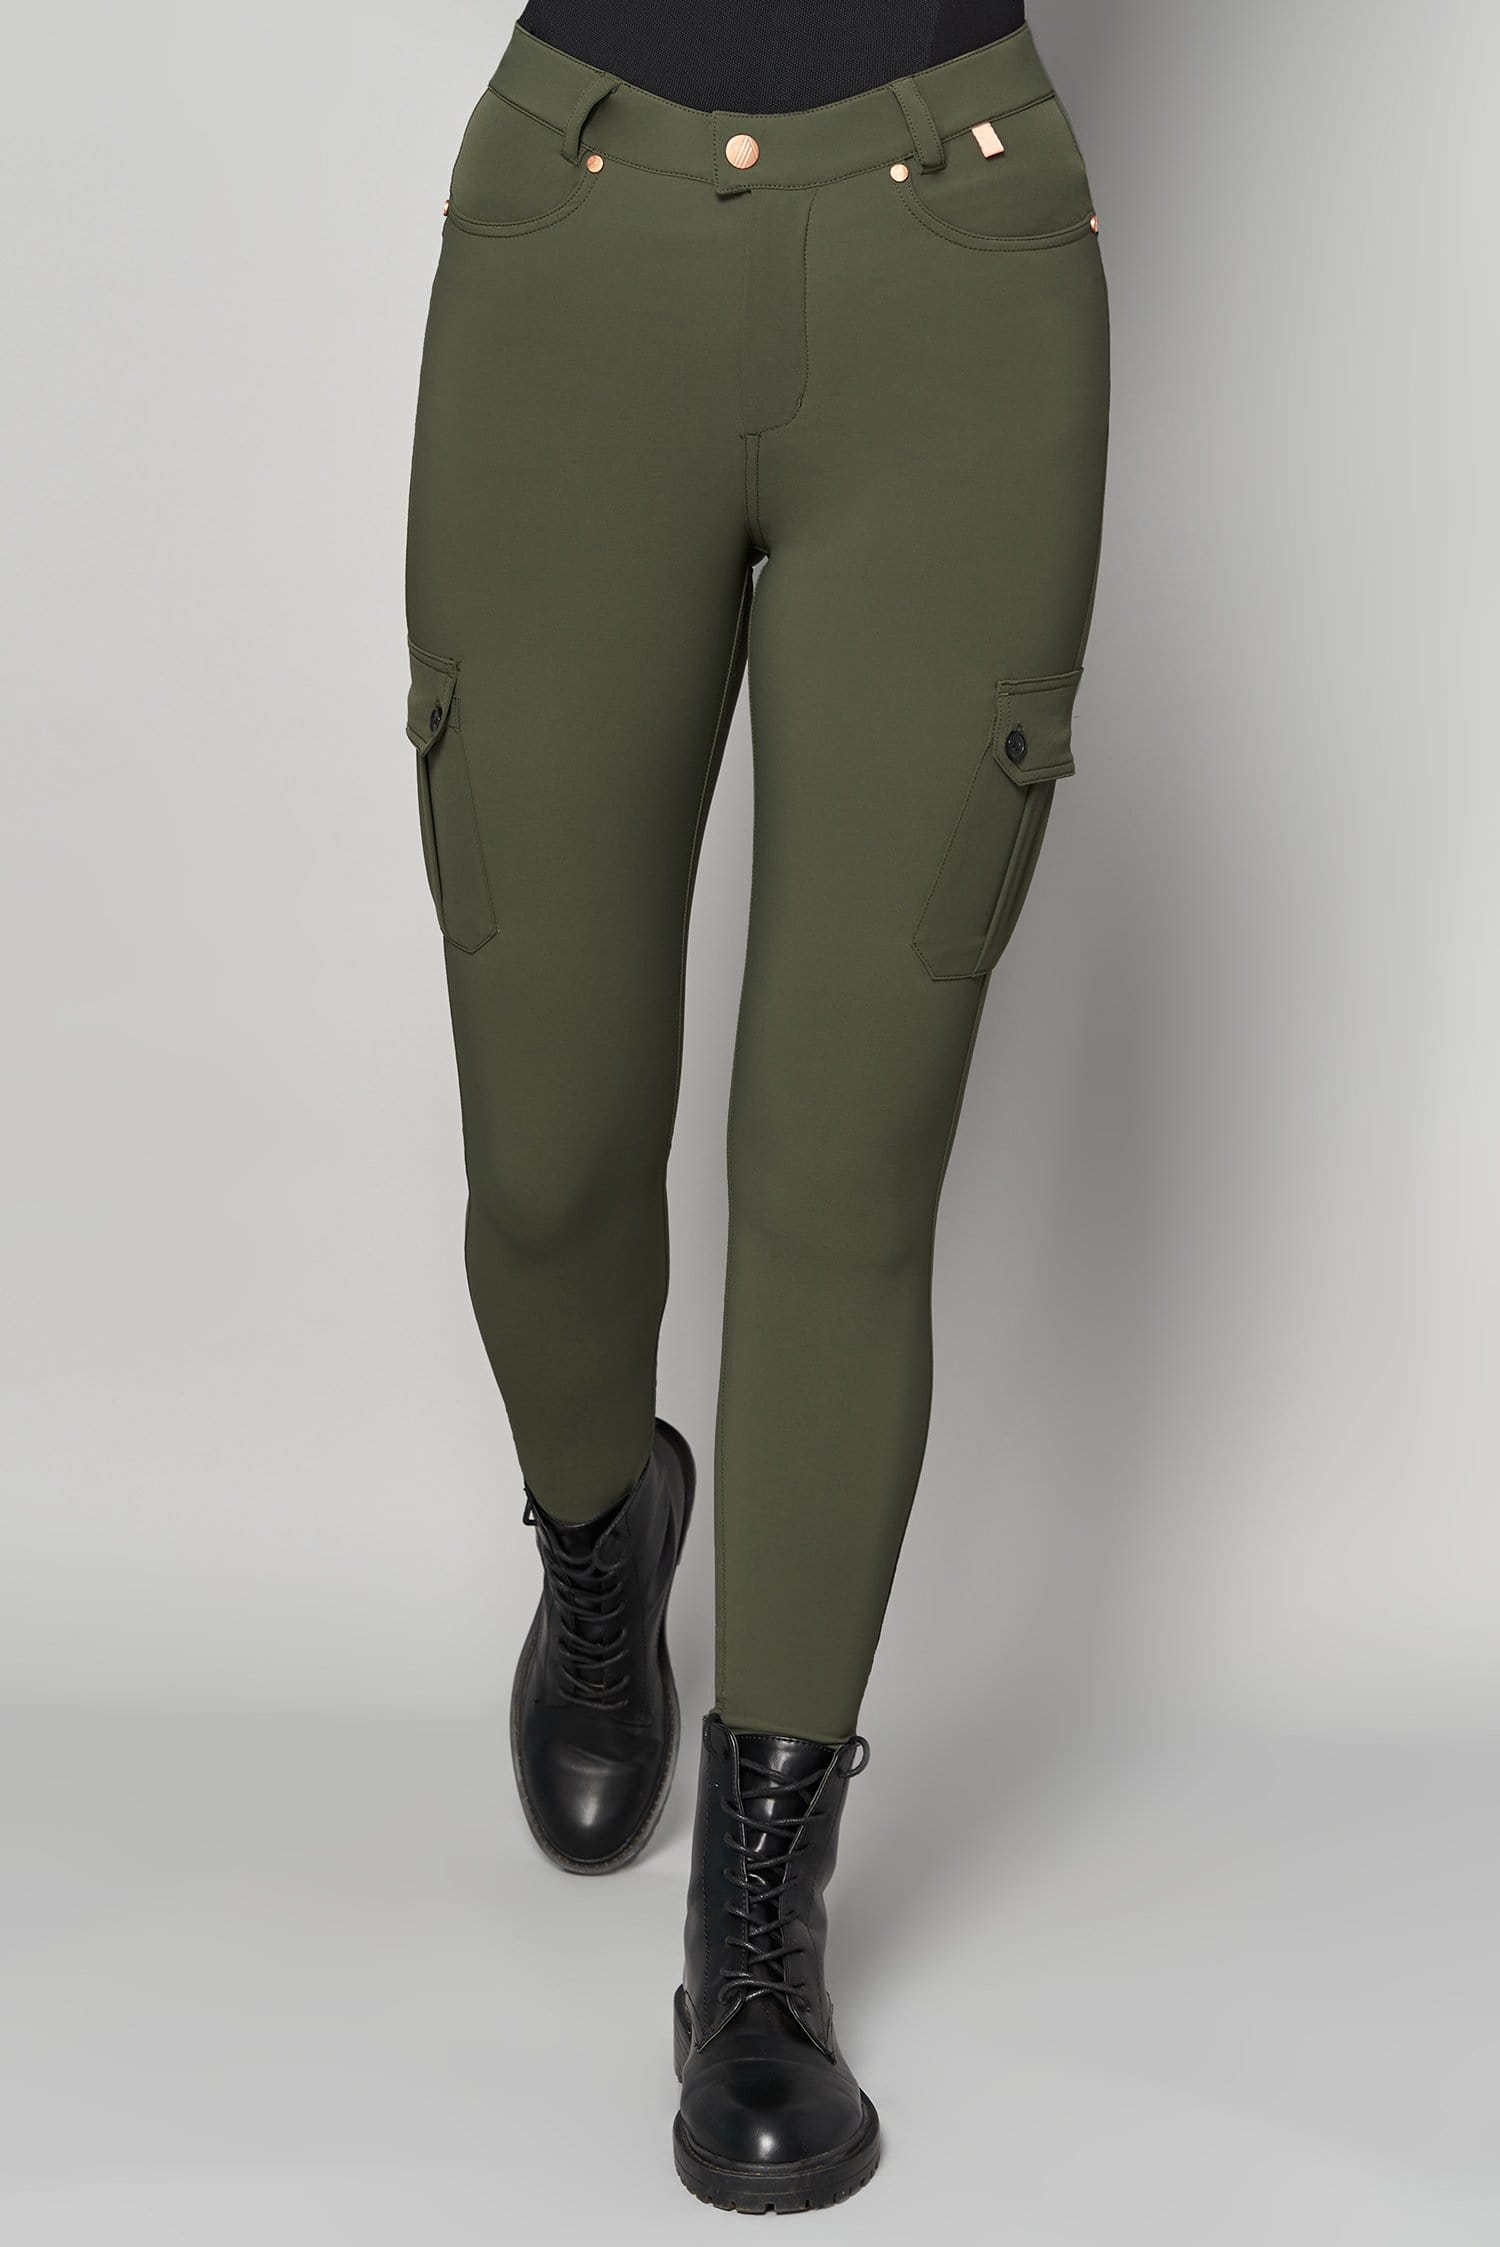 Cargo Max Stretch Outdoor Trousers - Khaki - 32r / Uk14 - Womens - Acai Outdoorwear